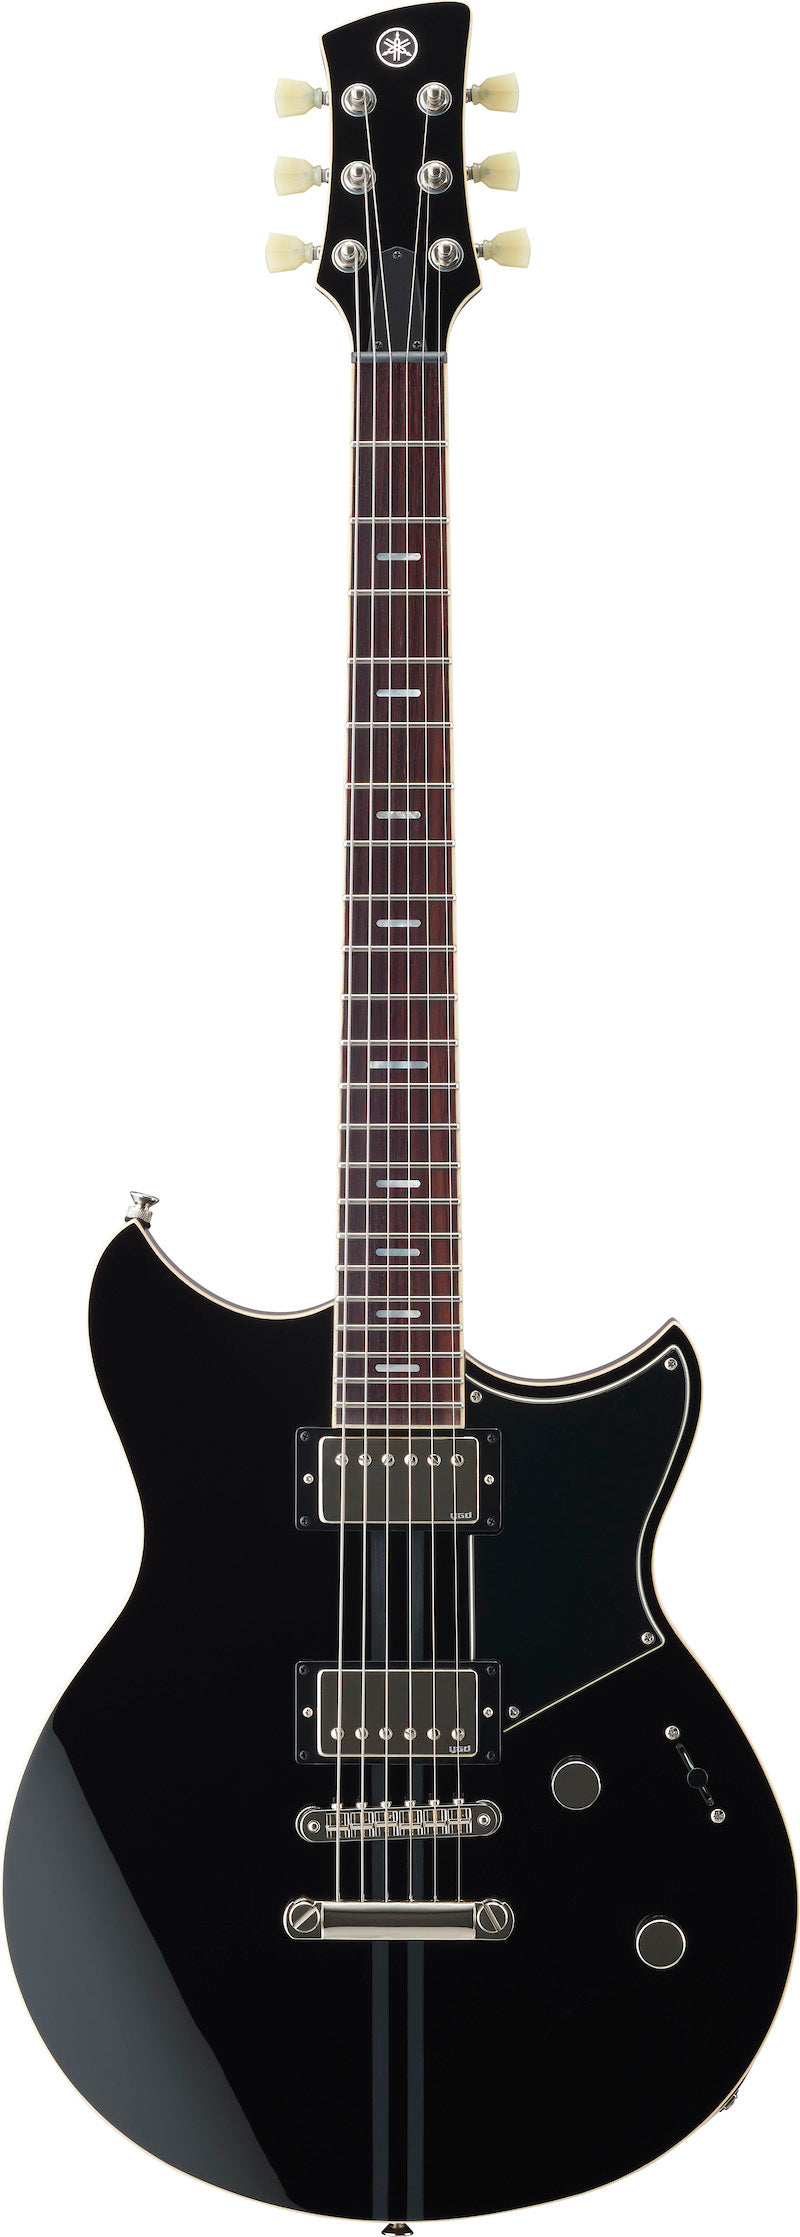 Yamaha Revstar RSS20 BL Electric Guitar - Black - A Pratte Guitars